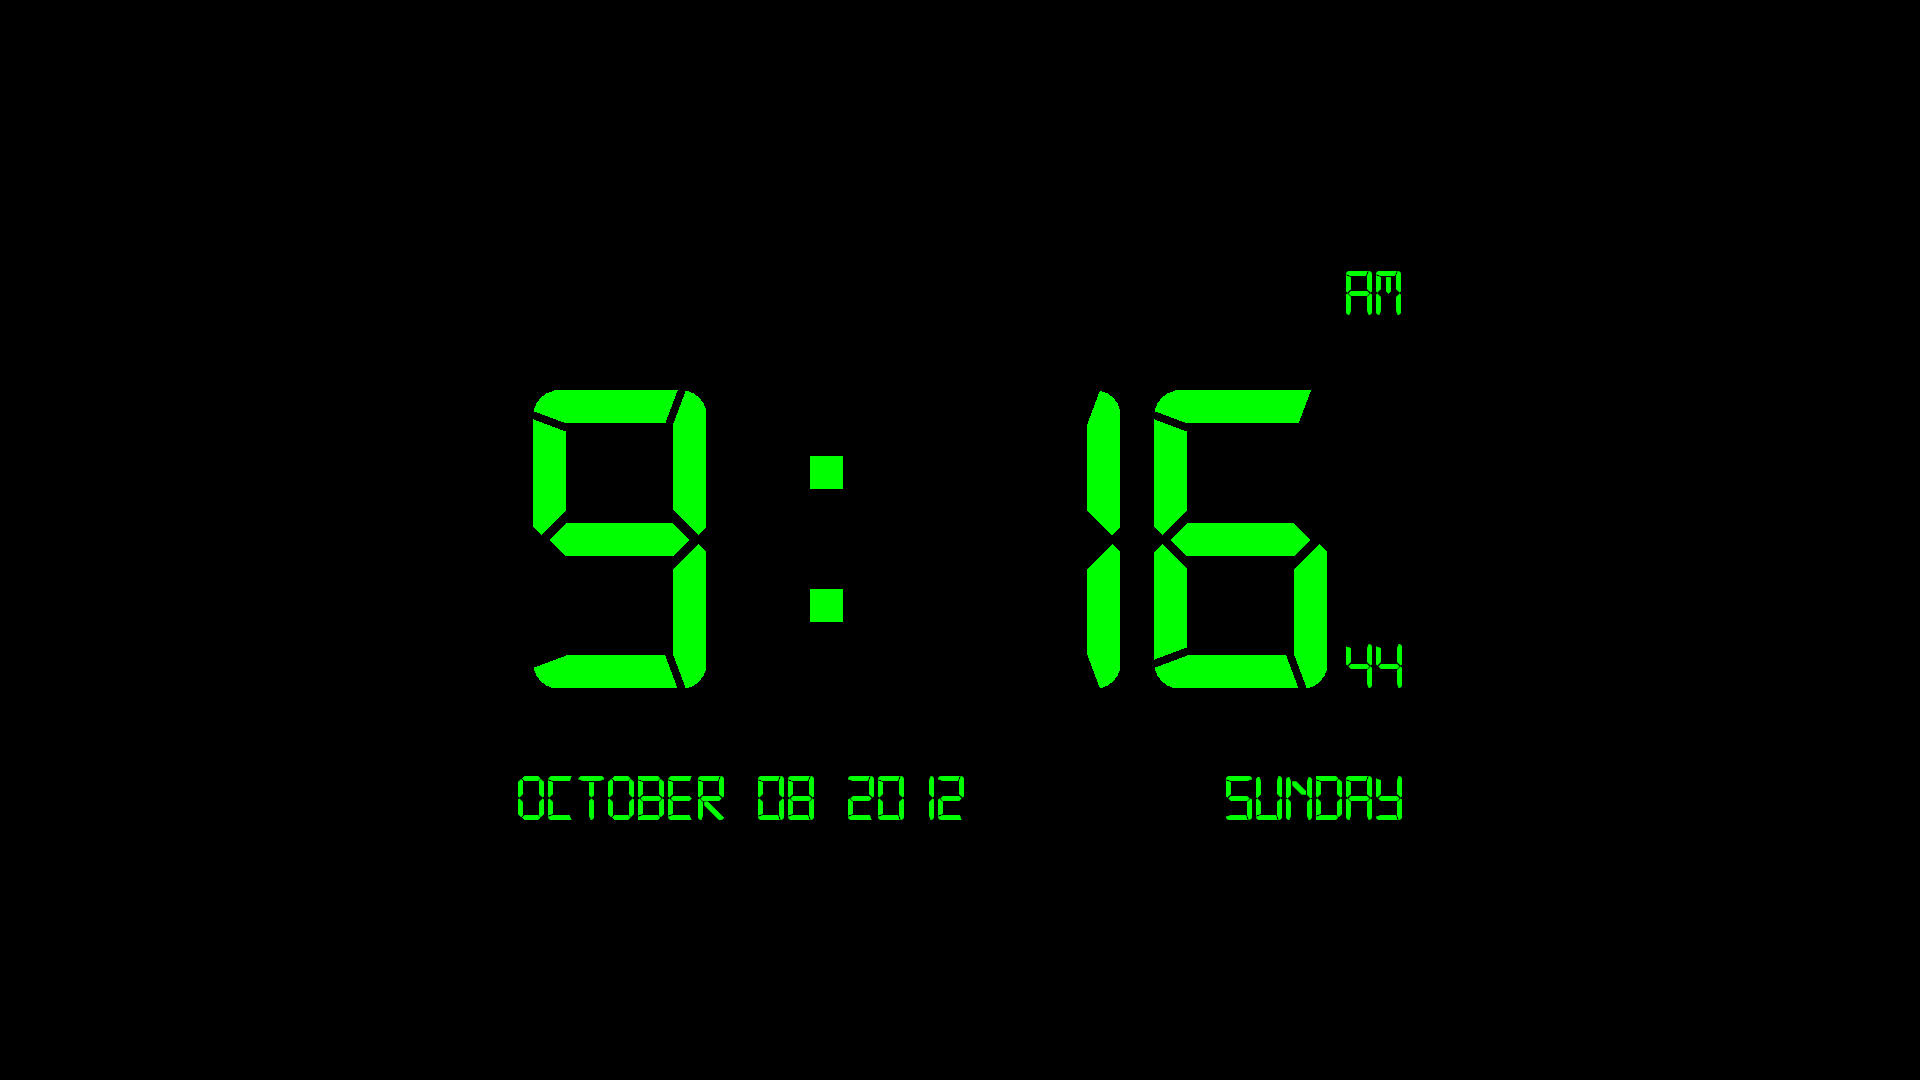 clock gadget for windows 10 desktop